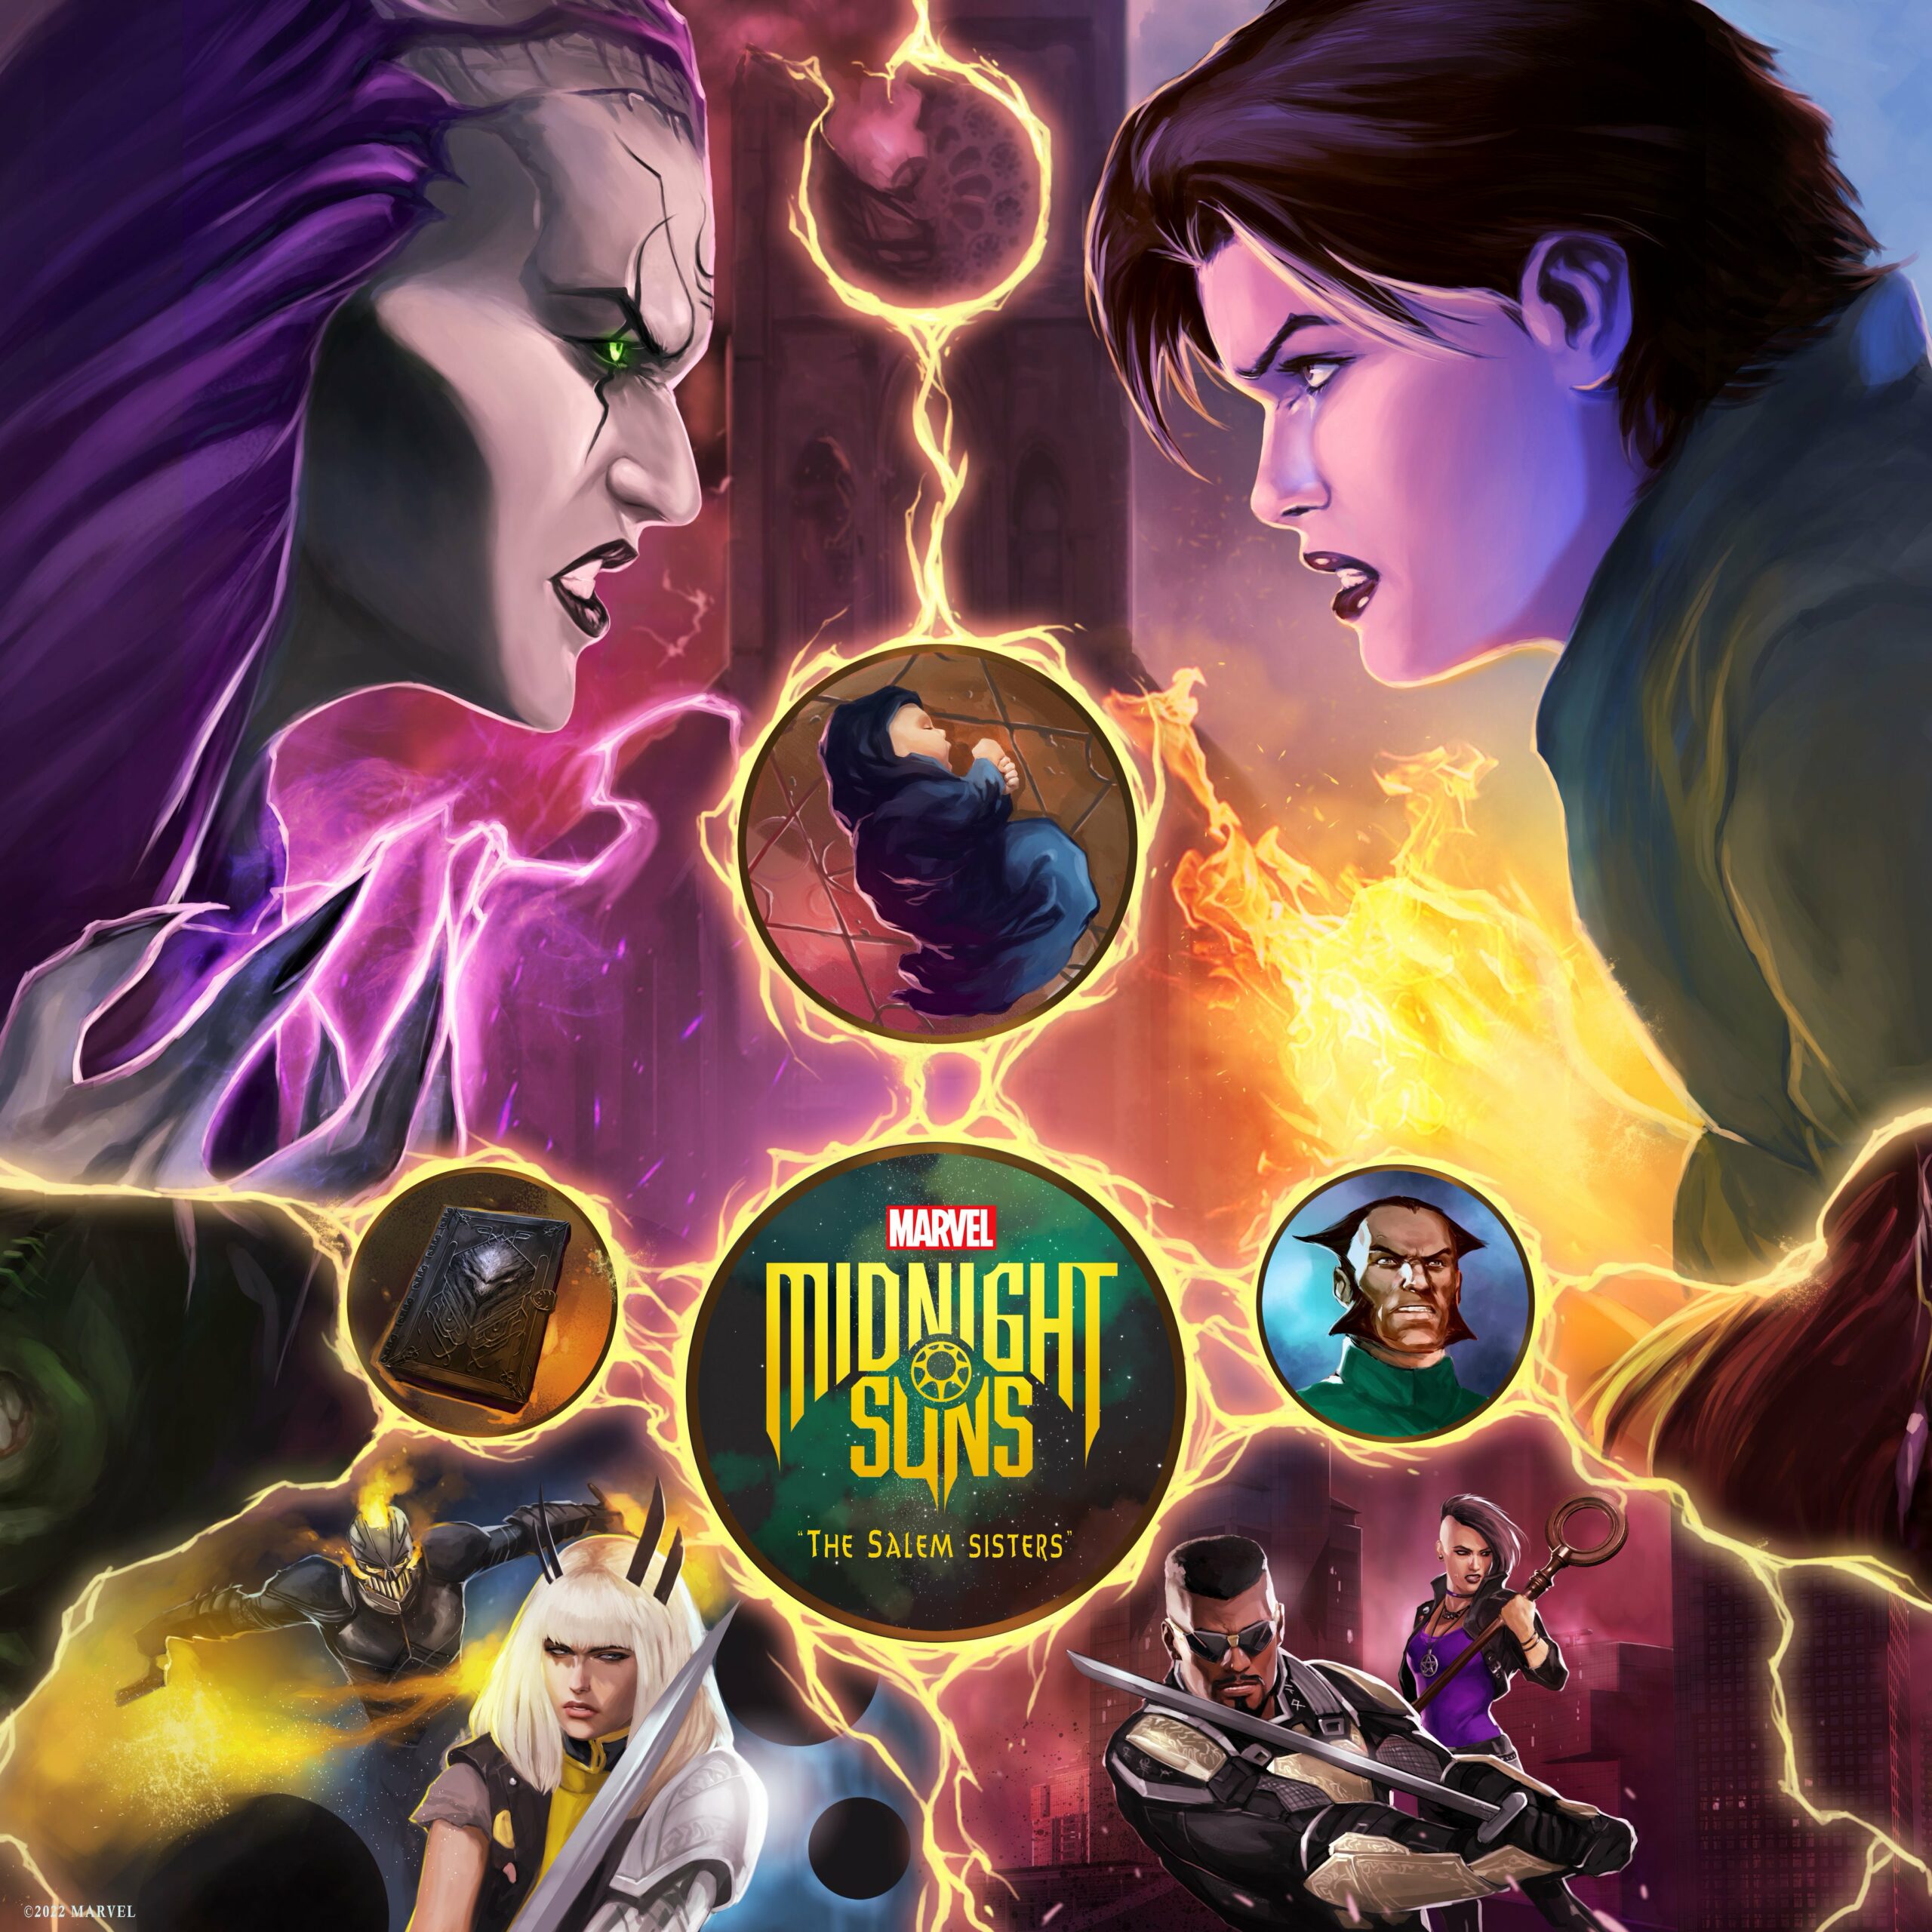 Marvel's Midnight Suns - The Livestream Of Superheroics and Swimwear 